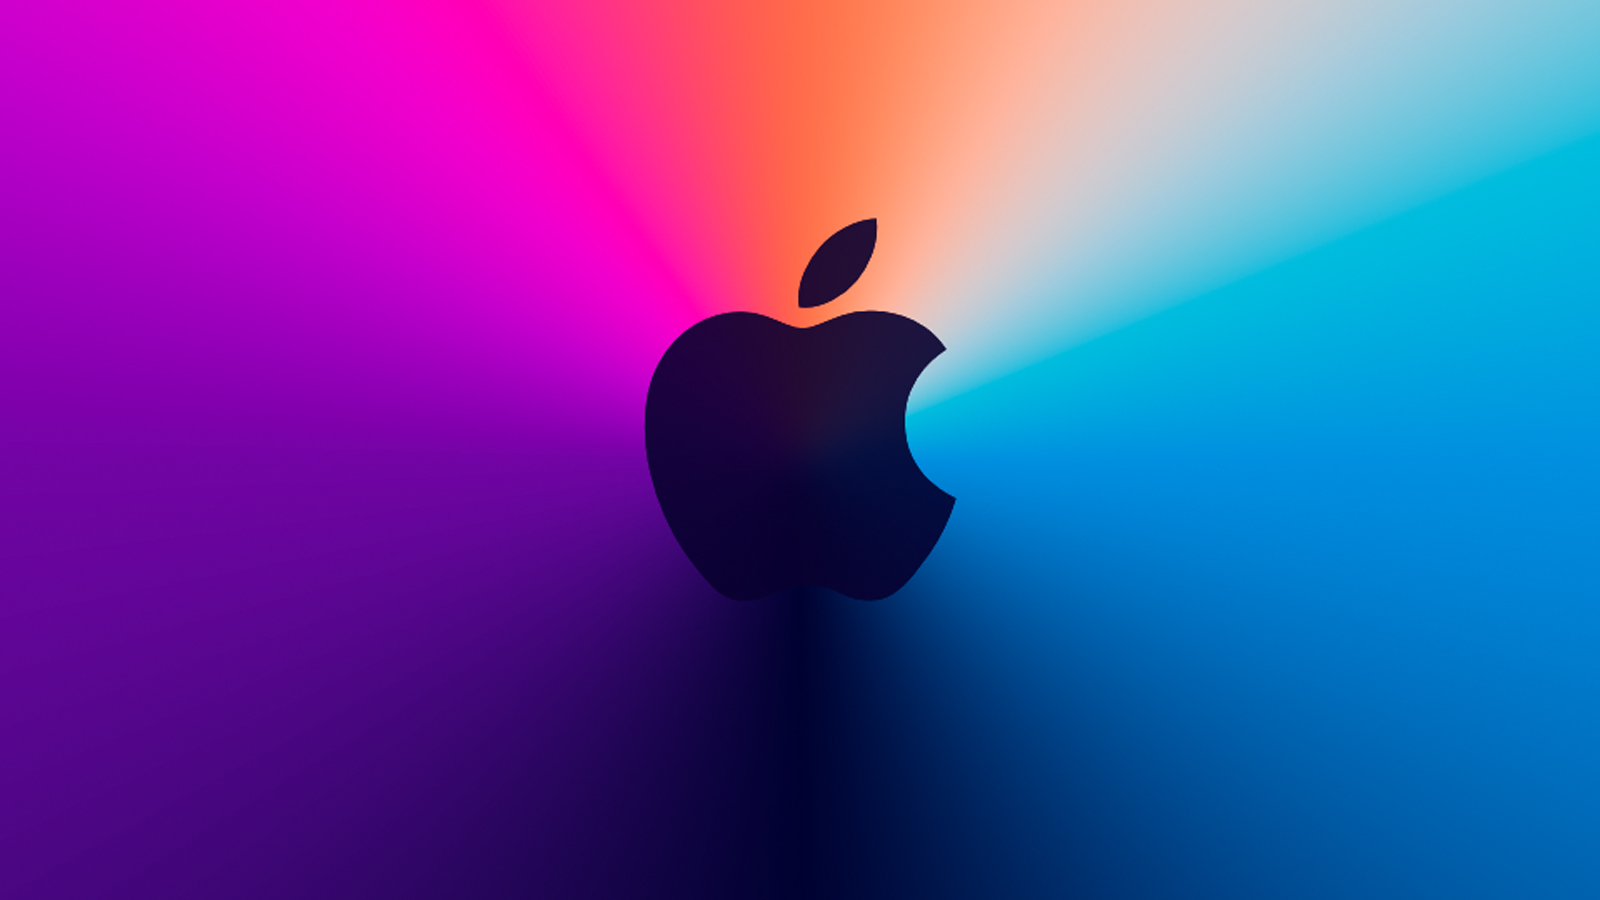 Apple شركة  13 ديسمبر 2020
Apple اخبار: ماذا افتقدنا الاسبوع الماضي؟